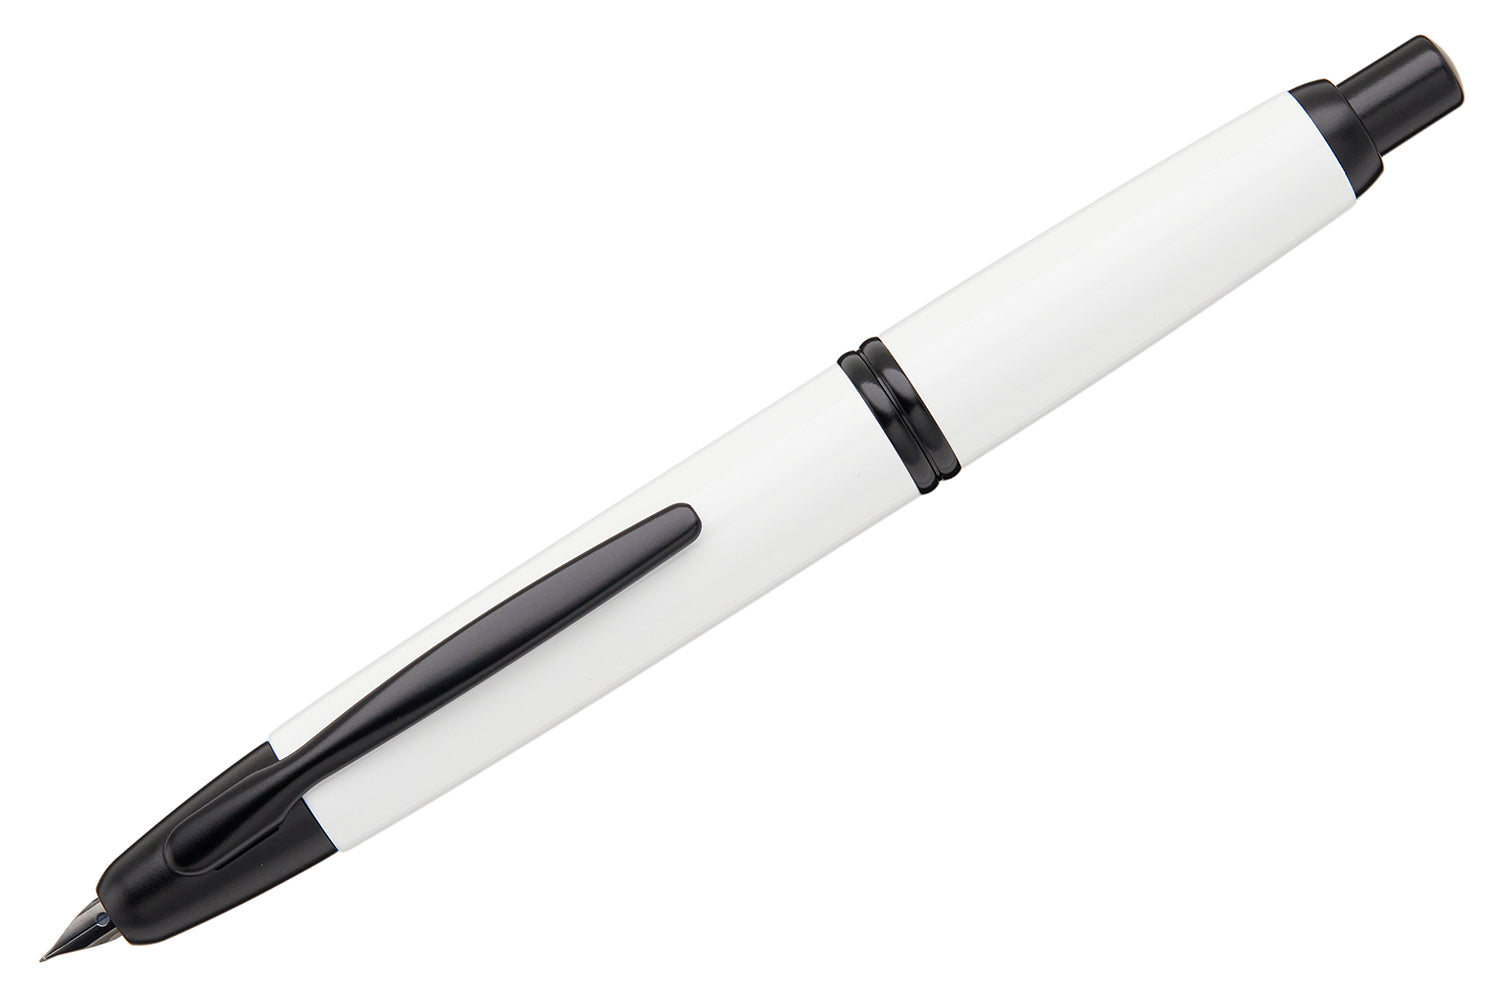 Pilot Vanishing Point Fountain Pen - White/Black - Extra-Fine